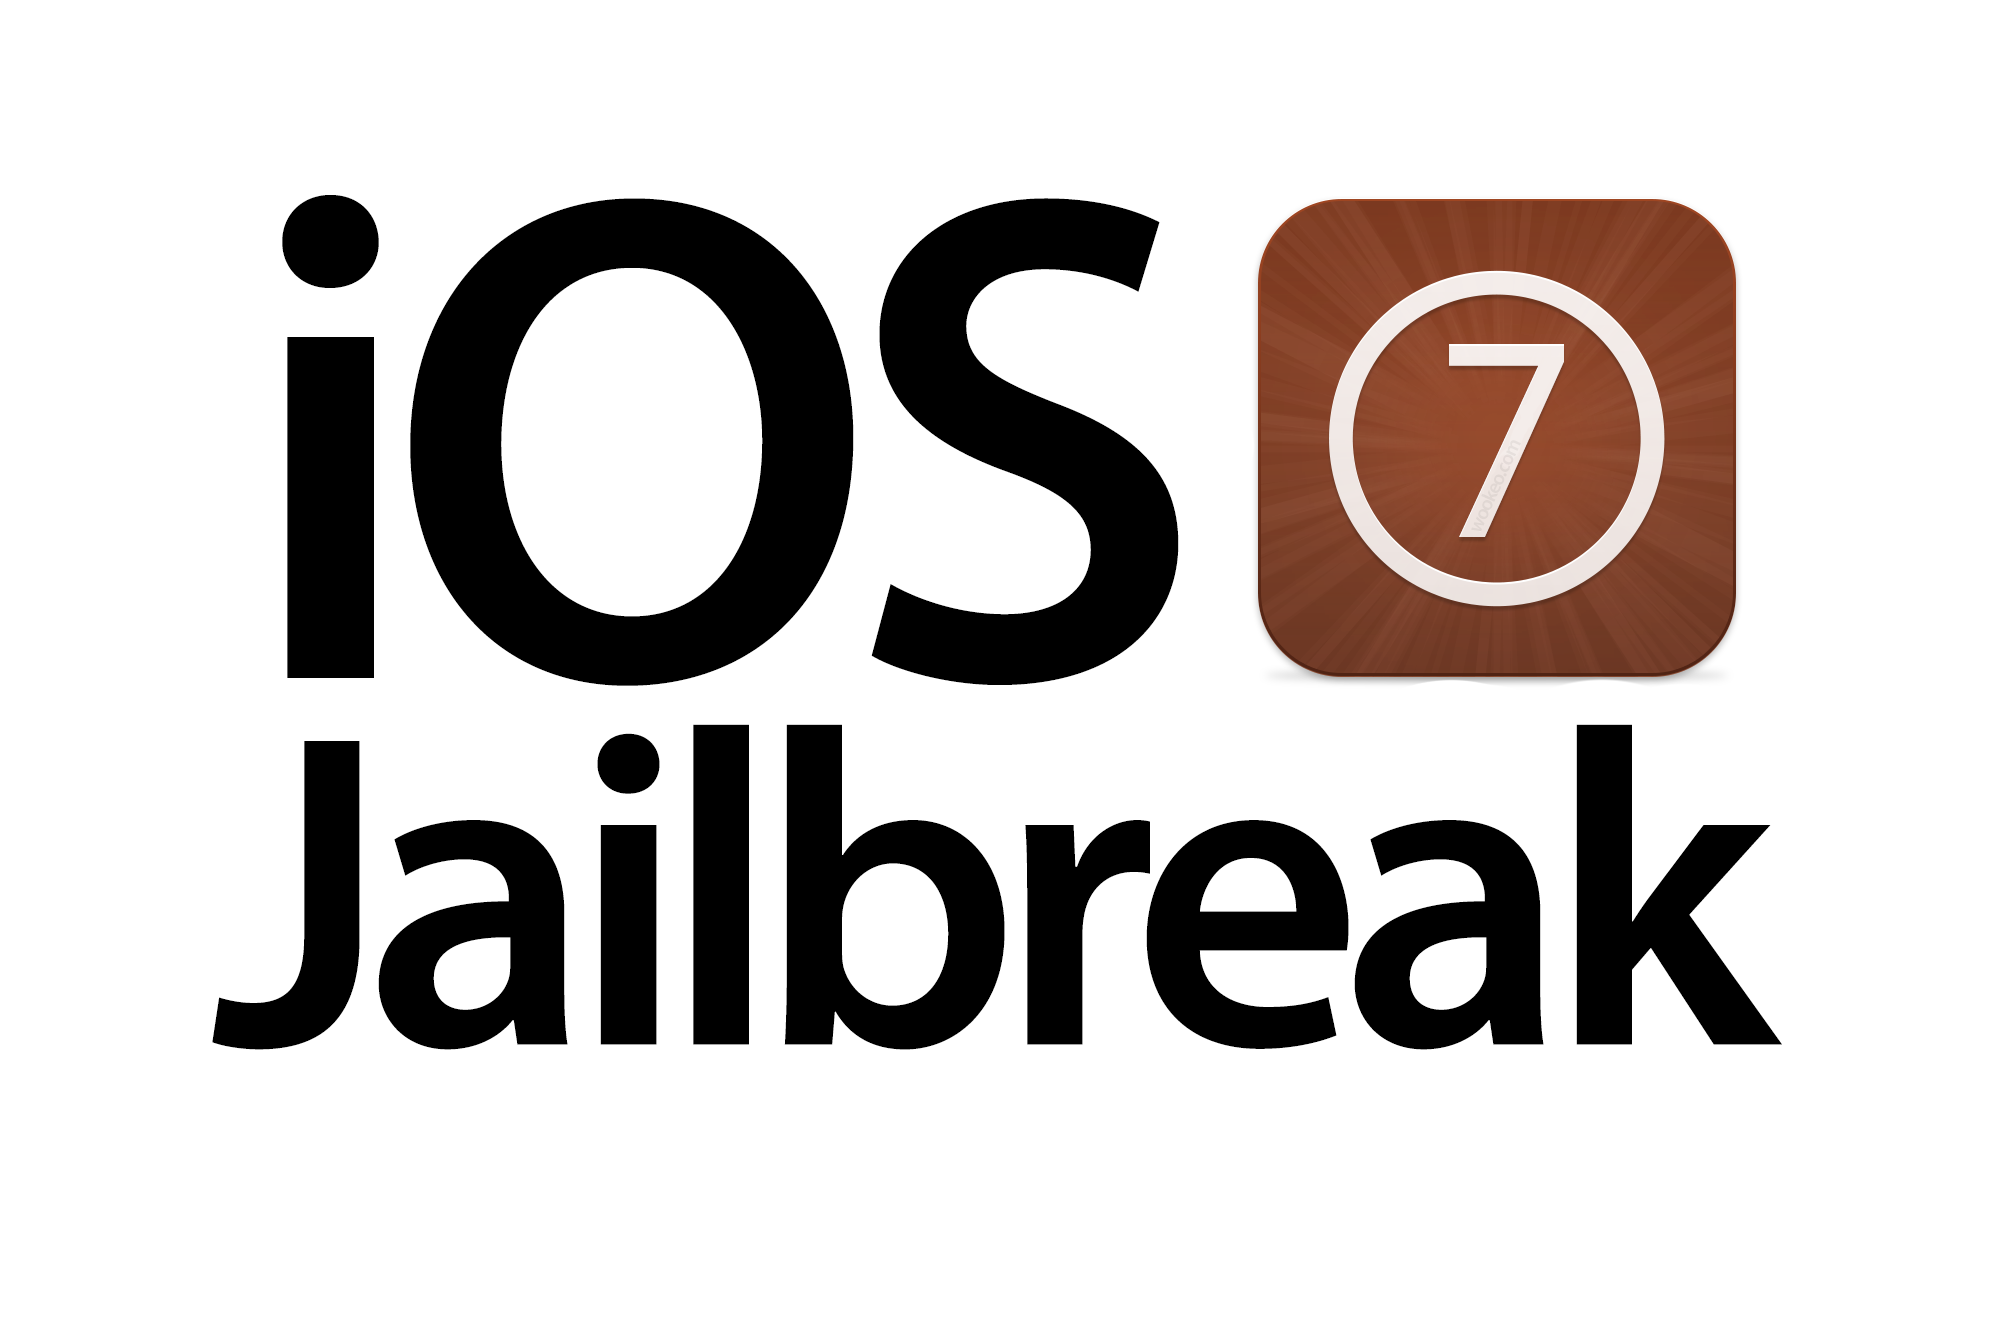 Tool to jailbreak iPhone, iPad and iPod